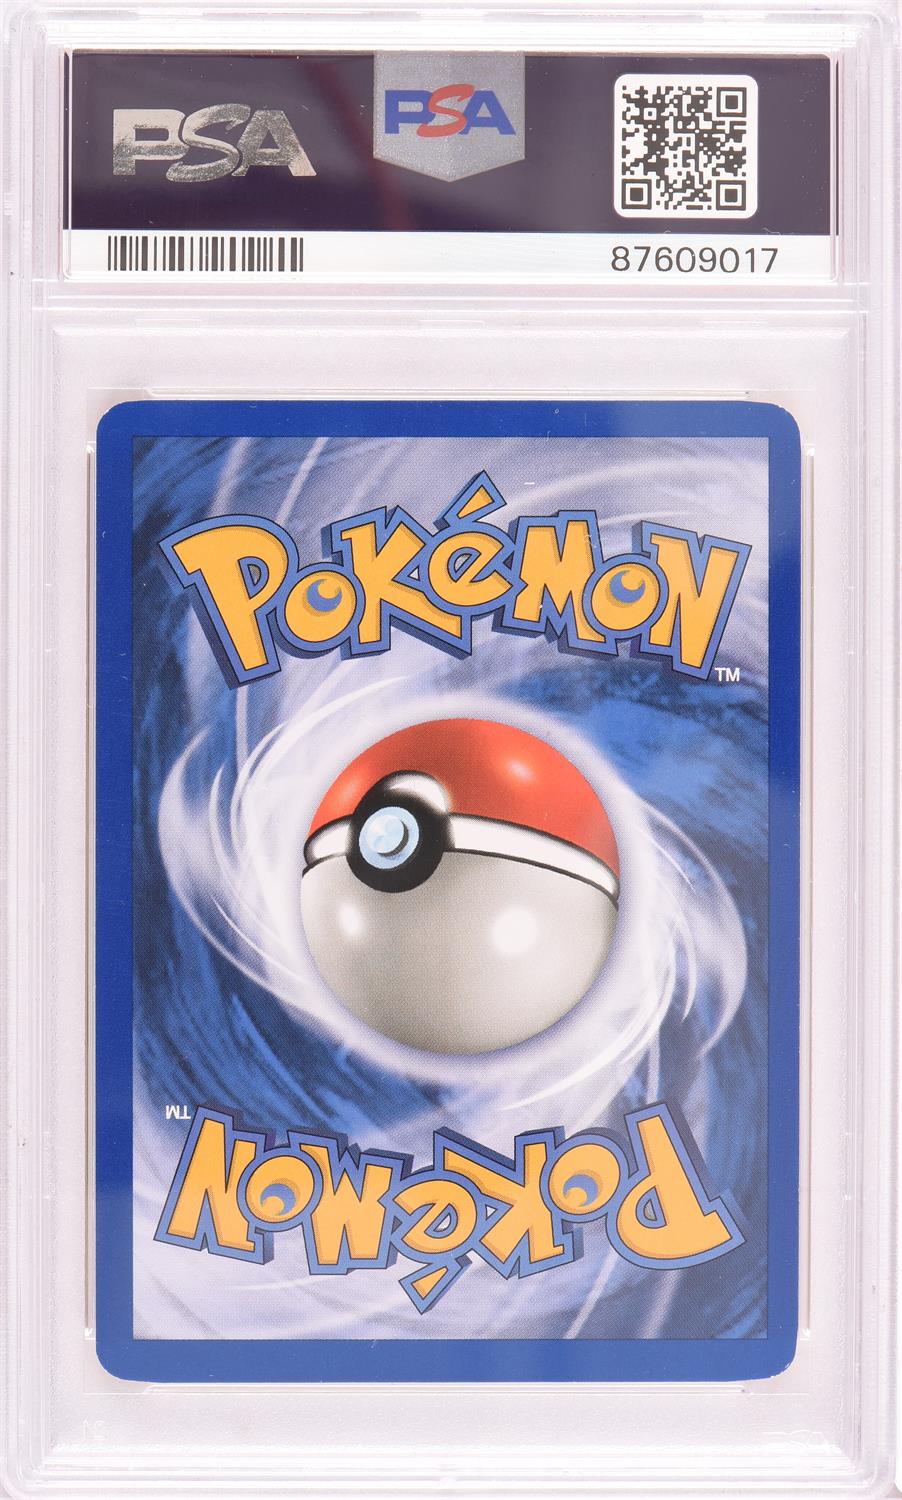 Pokemon TCG. Pokemon TCG. Charizard Base Set Holographic Pokémon Card. Number 4/102 graded PSA 8. - Image 2 of 2